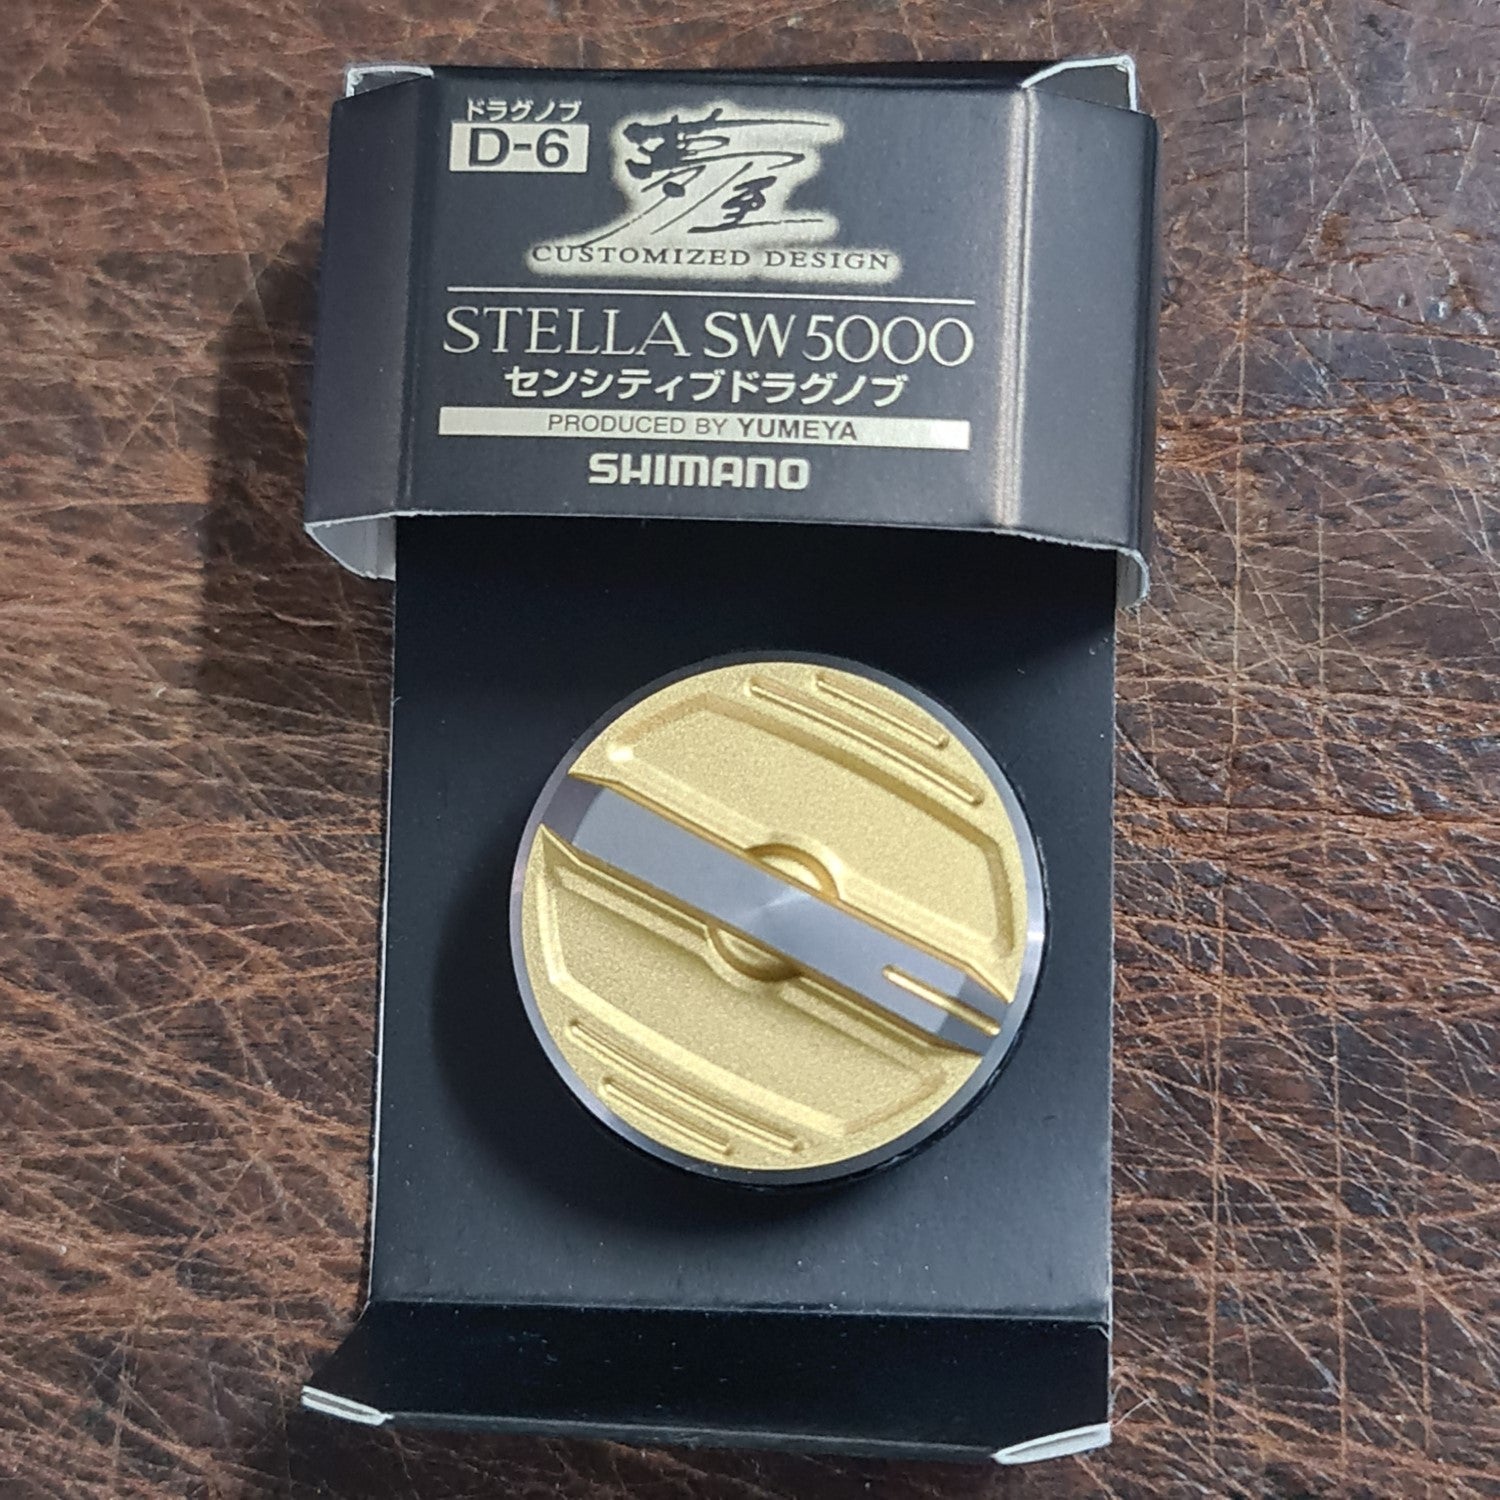 Shimano Yumeya Drag Knob D-6 for Stella 2013 SW 5000 Top